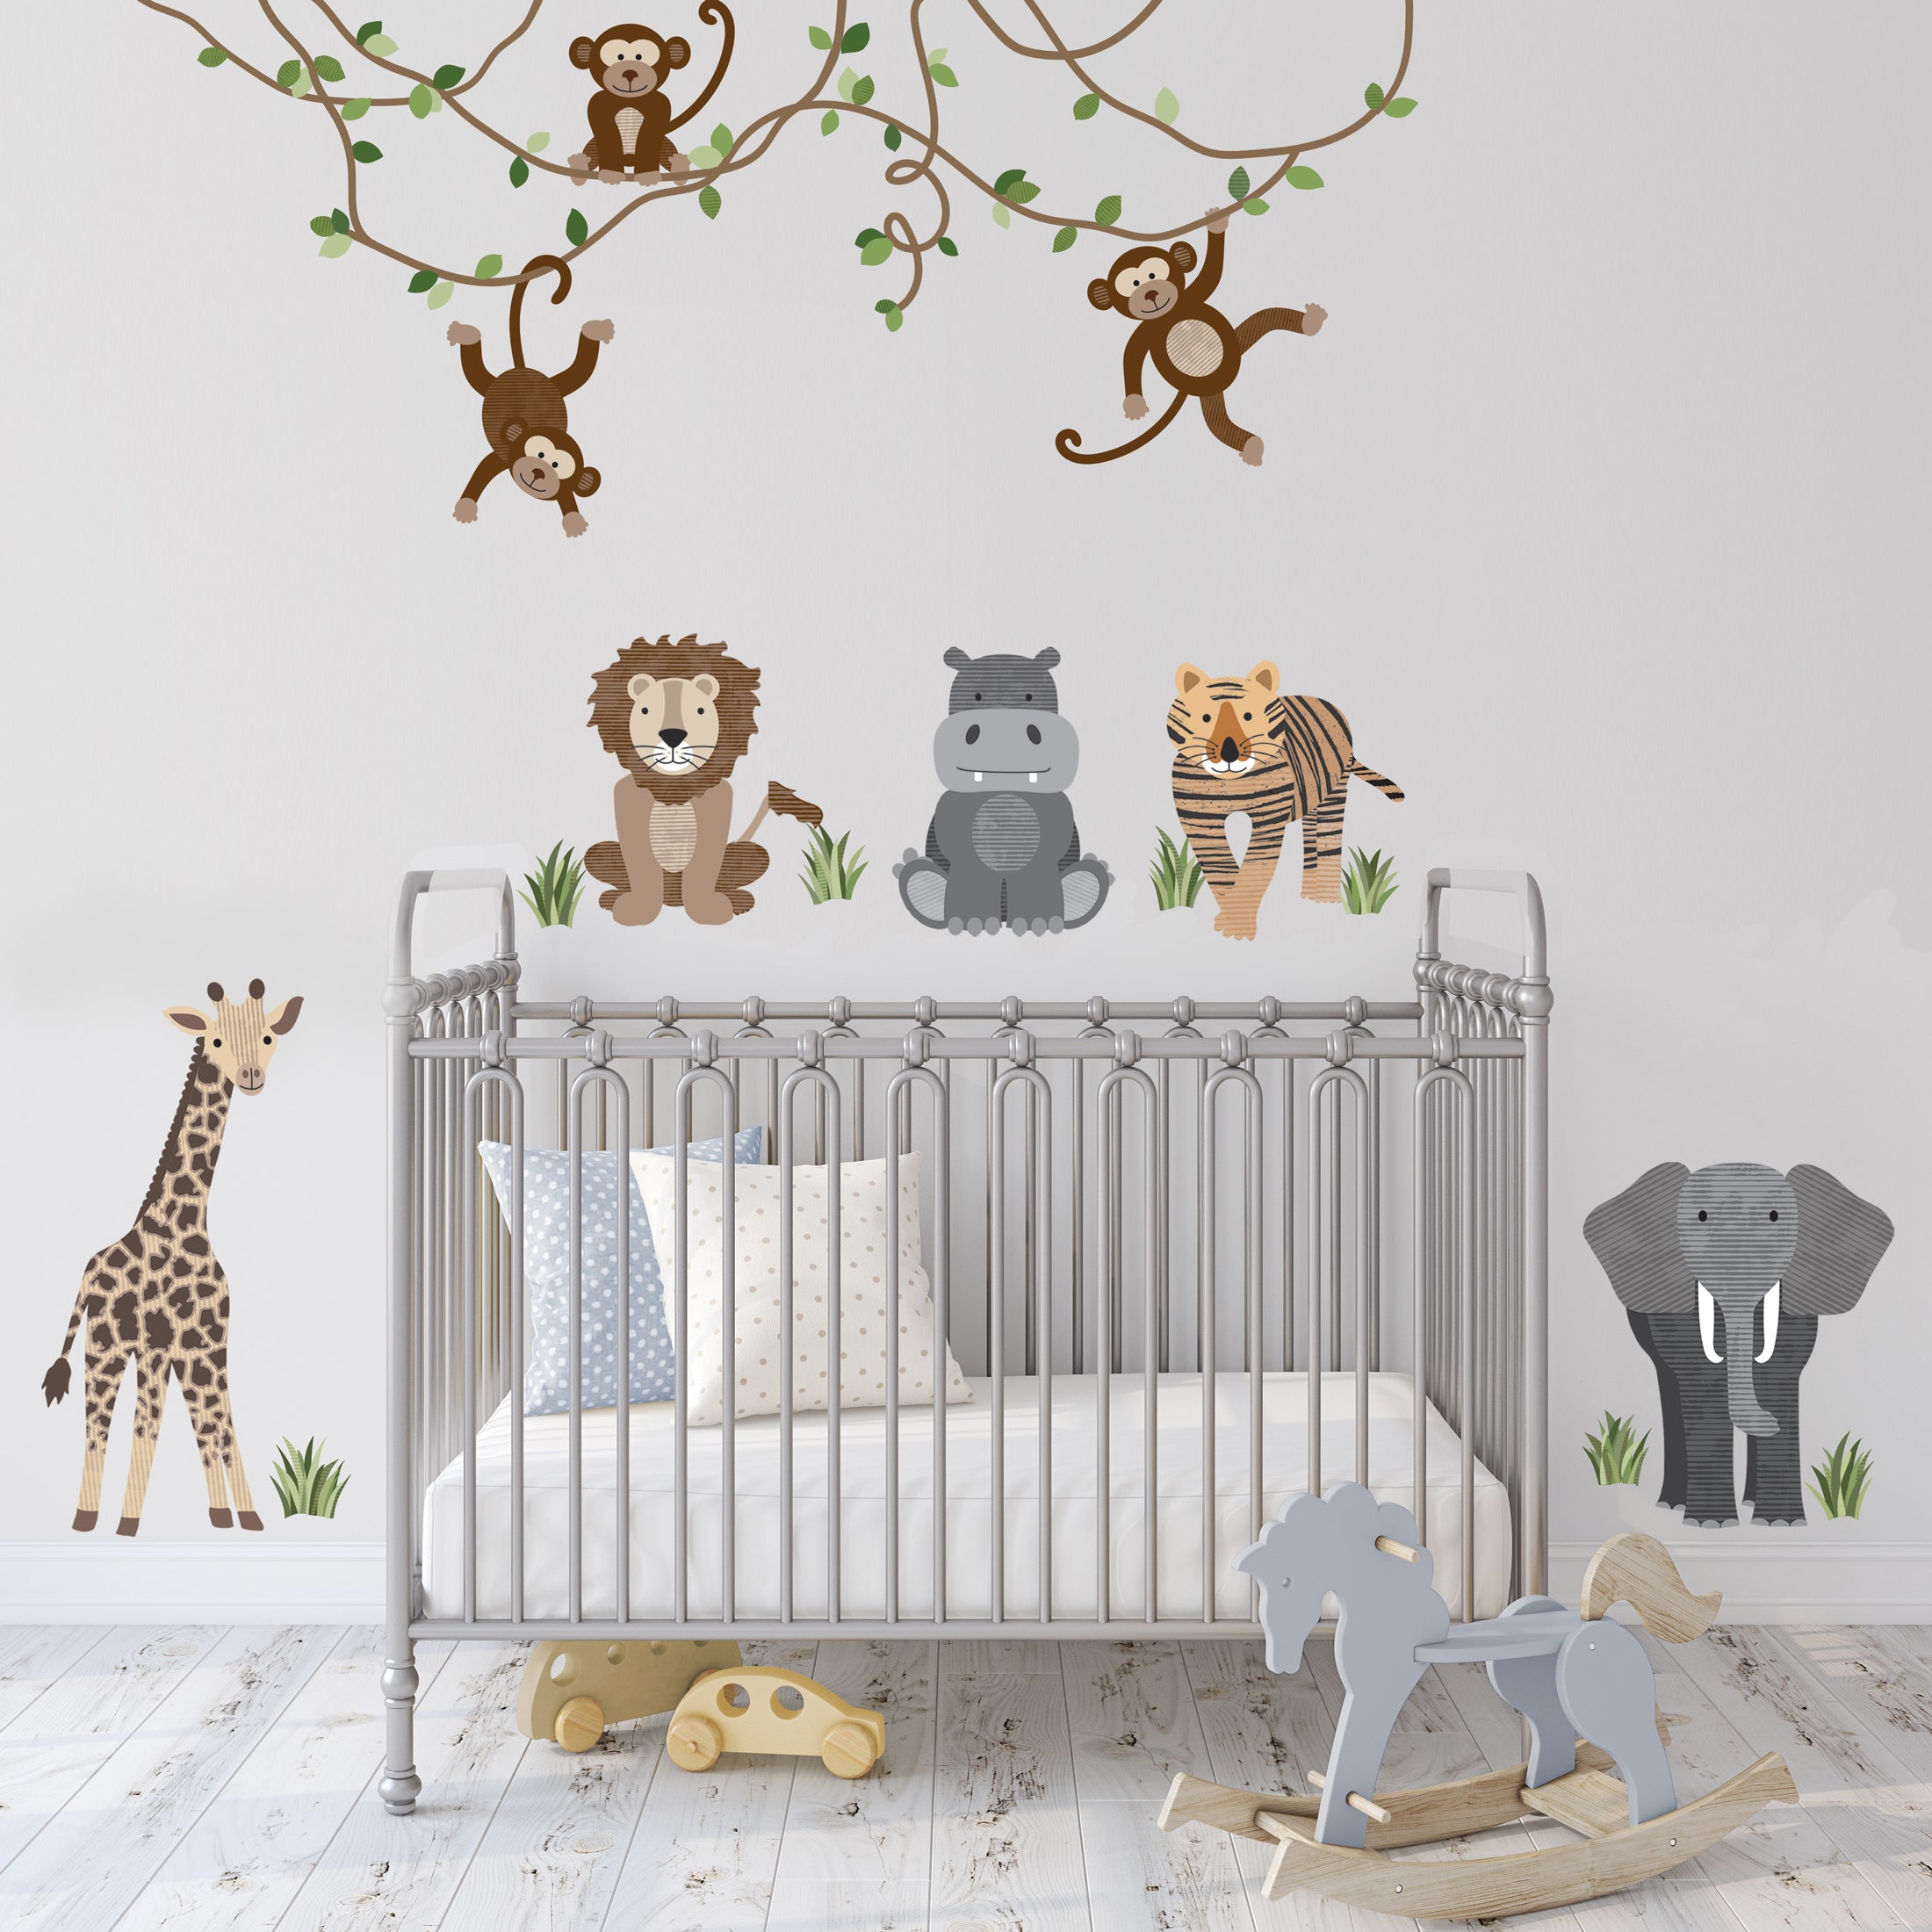 Nursery Wall Decals, Baby Stuff, Safari Stickers